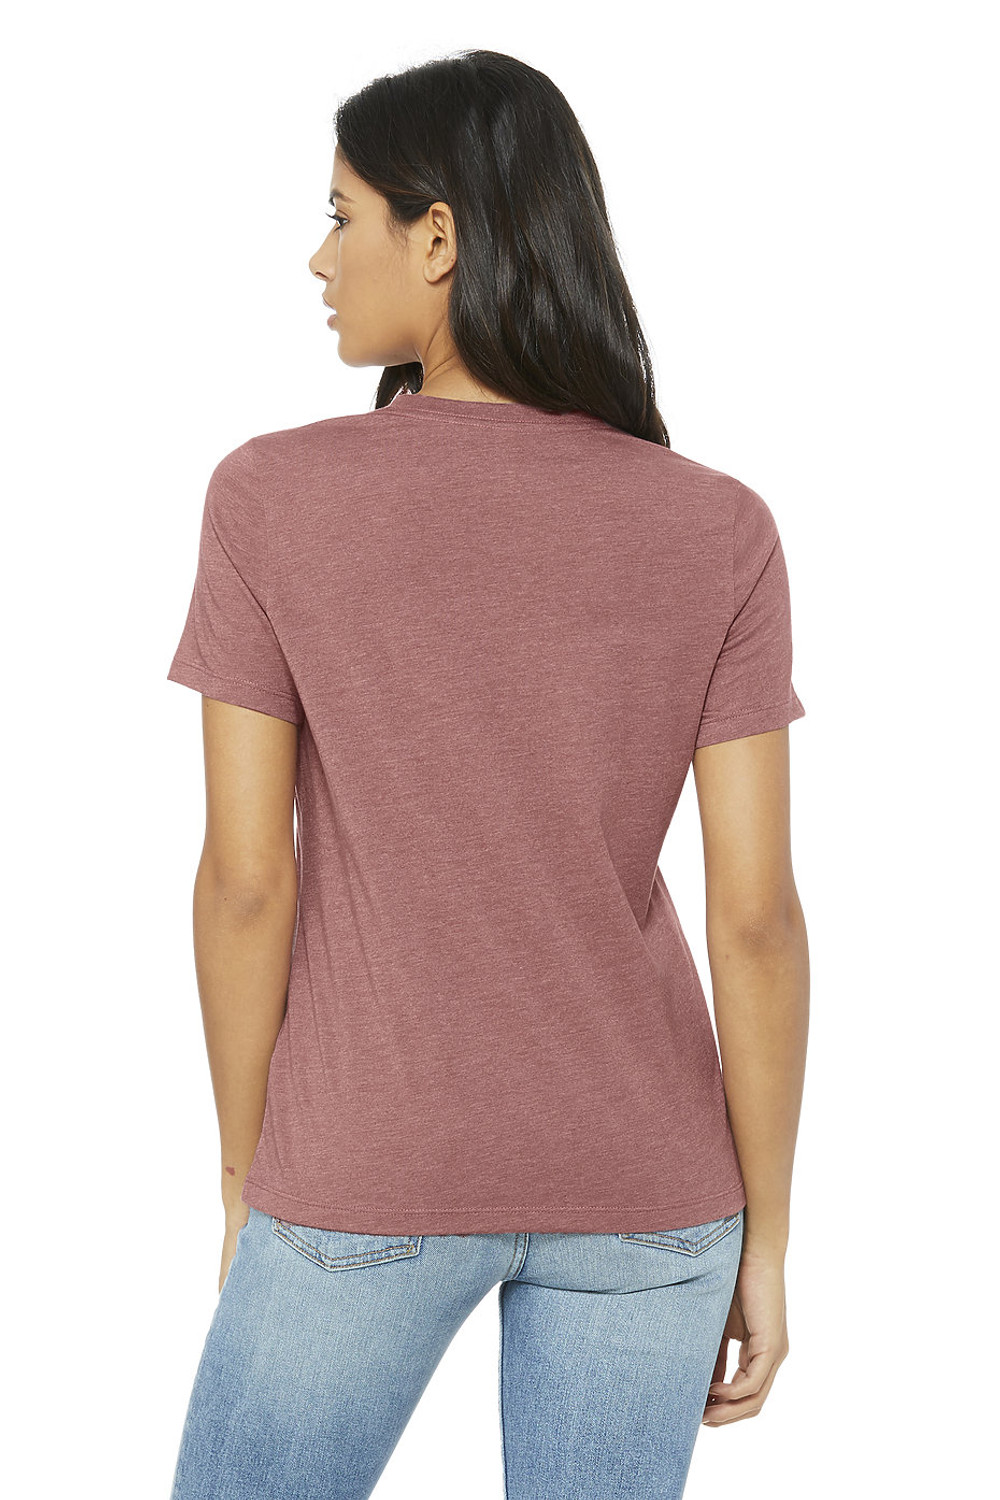 Cathalem Cotton Tshirts for Women Short Sleeve T-Shirt Stretchy